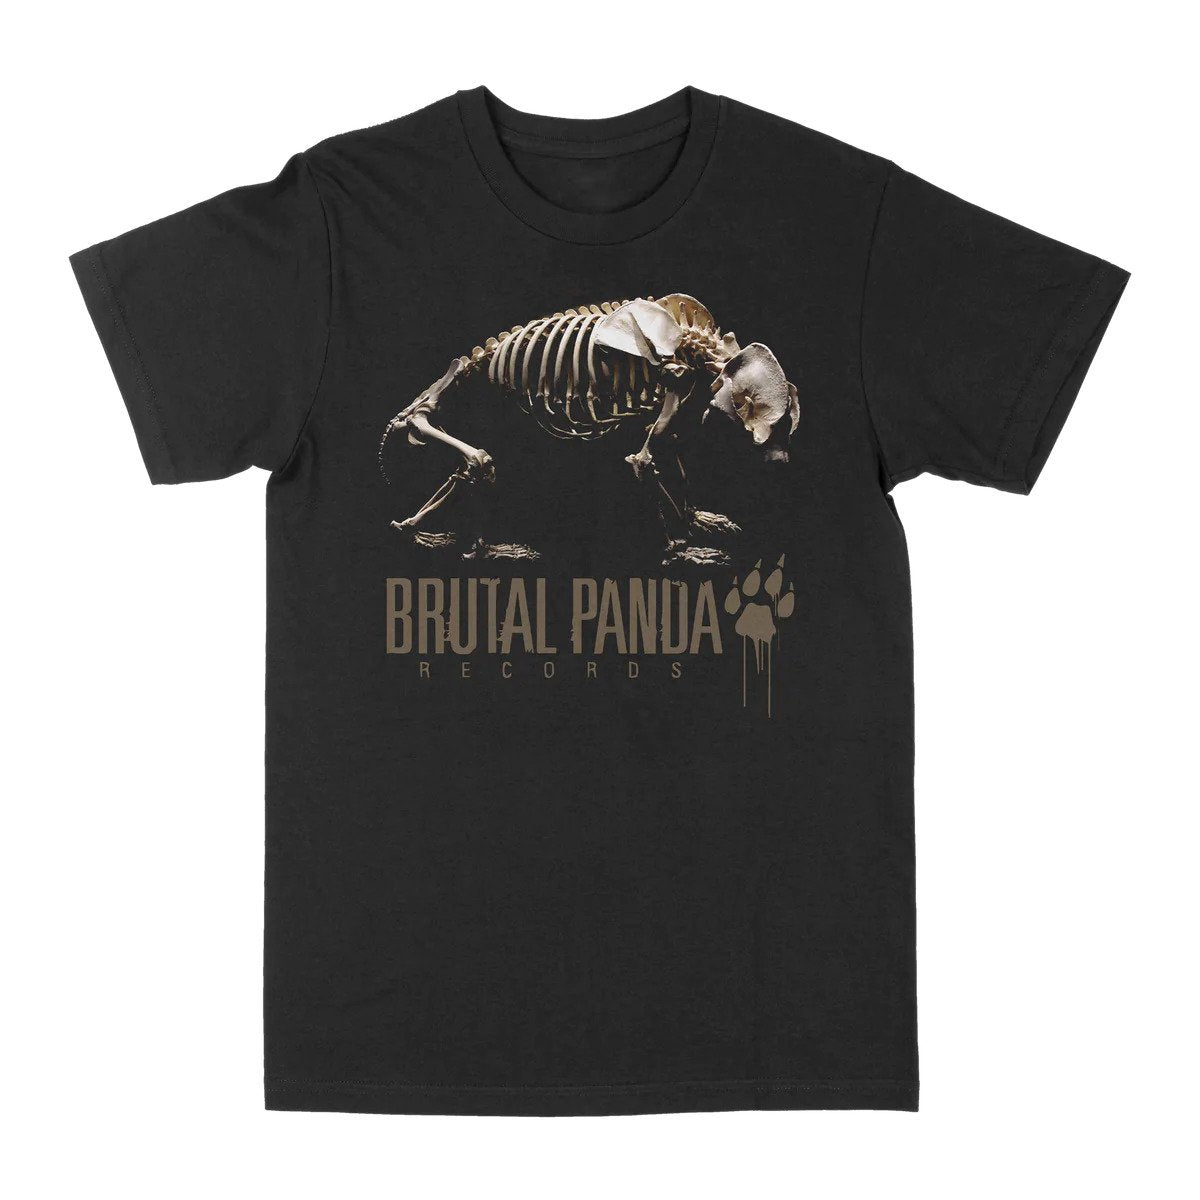 Brutal Panda Records - Panda Skeleton T-Shirt (Designed by Jacob Bannon)